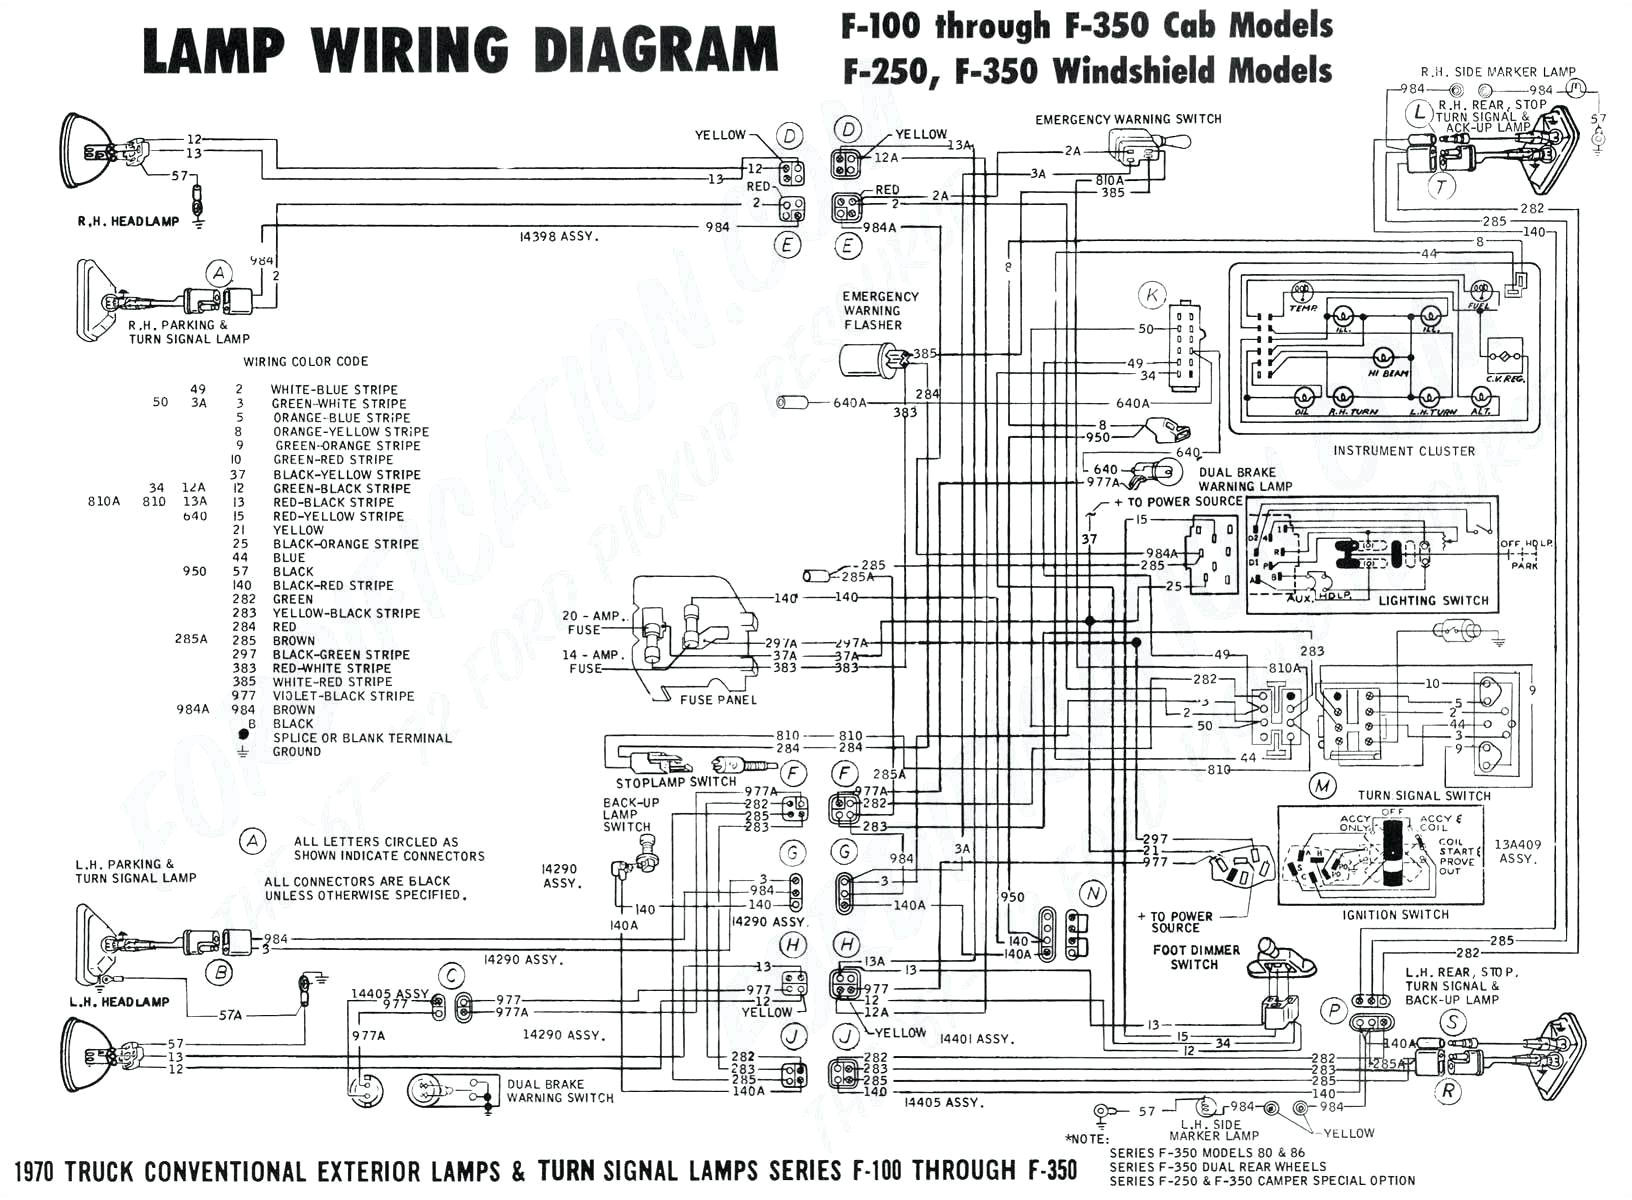 1935 ford headlight switch wiring wiring diagram today 1935 ford headlight switch wiring